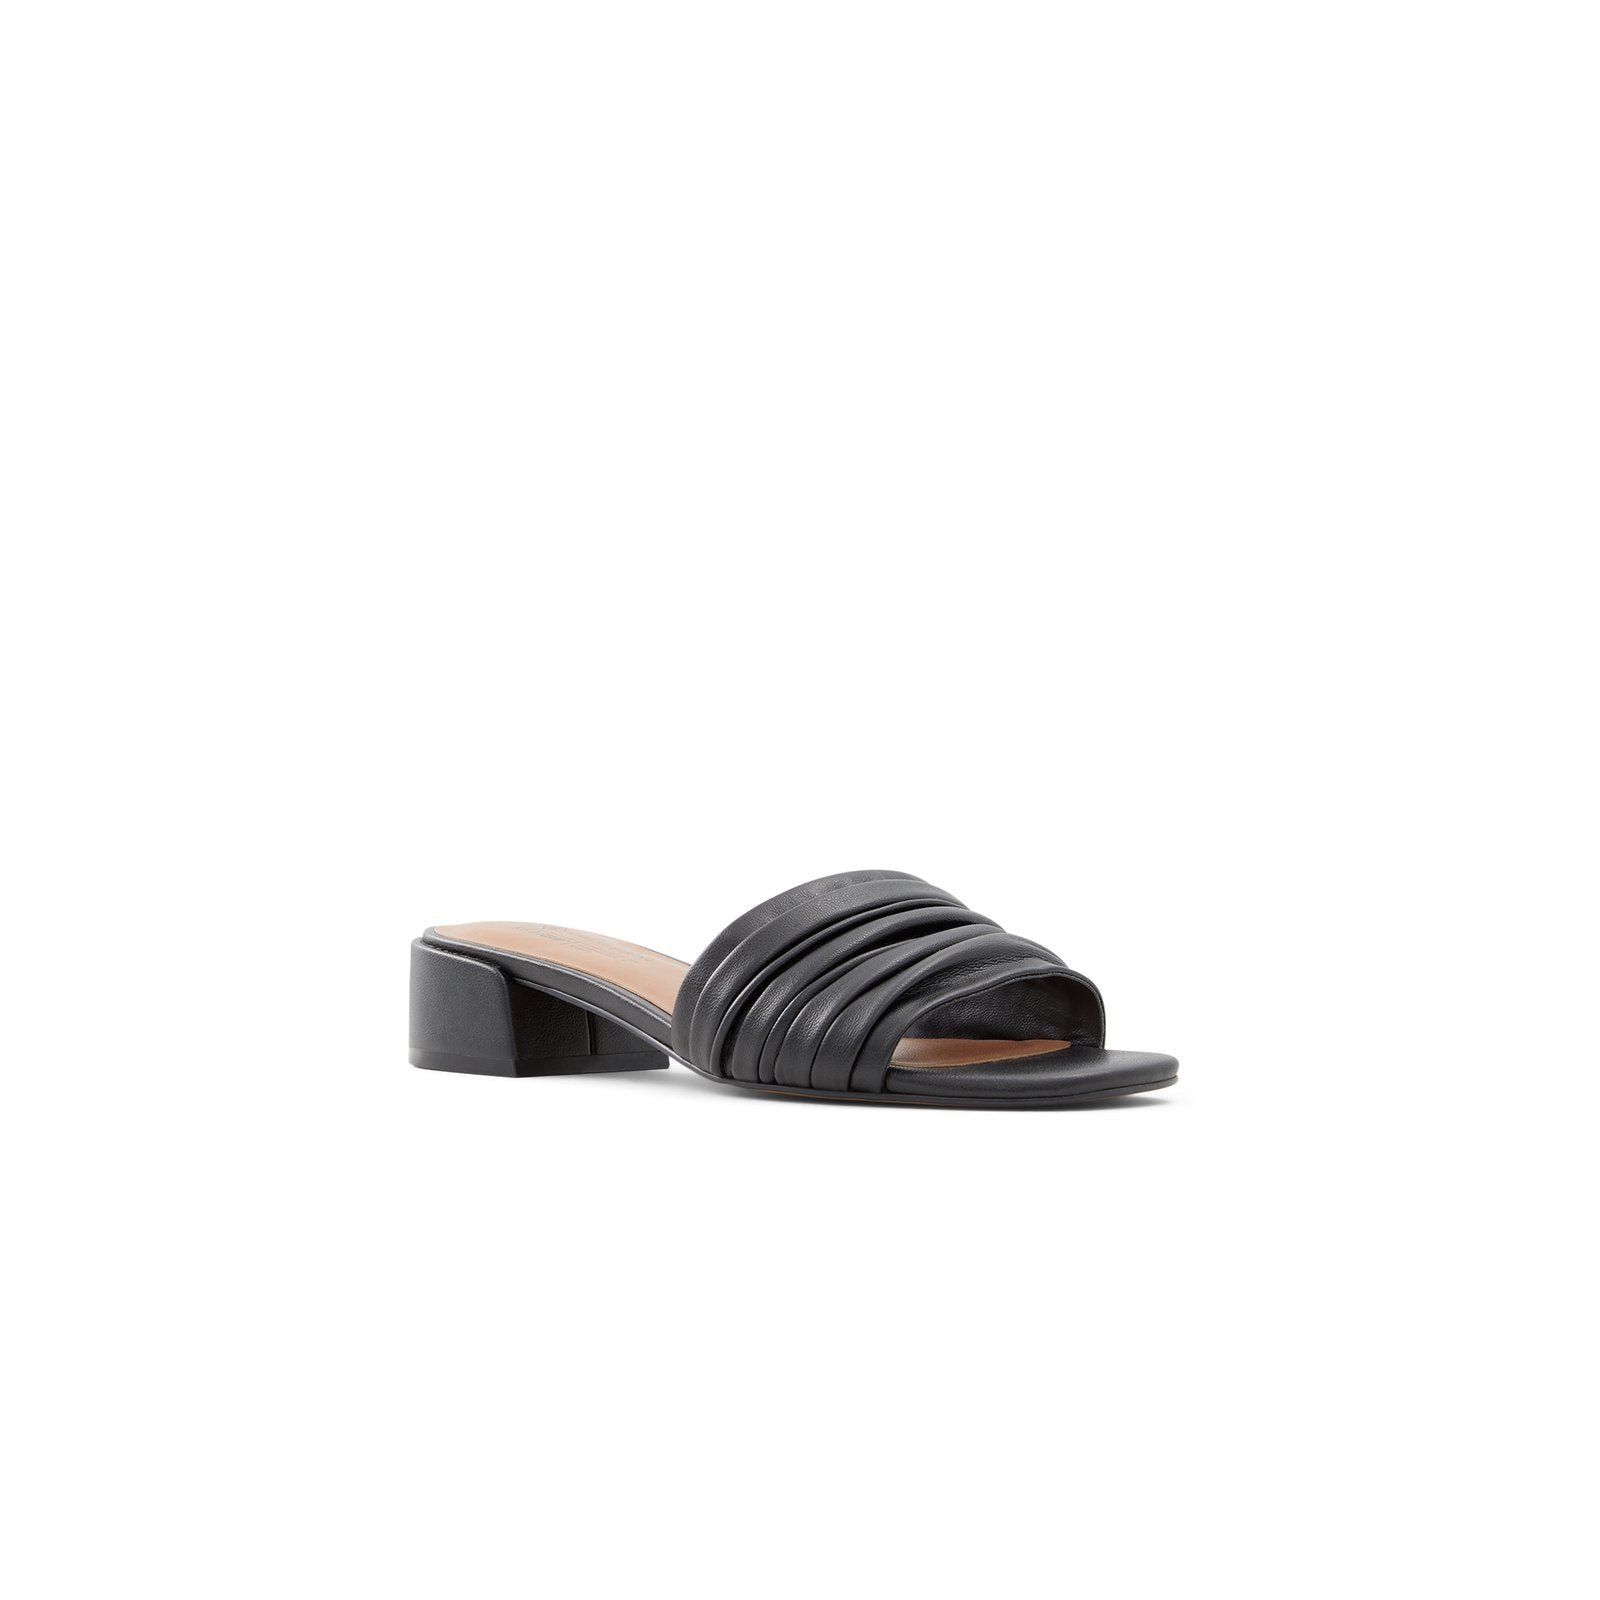 Drizza Women Shoes - Black - CALL IT SPRING KSA